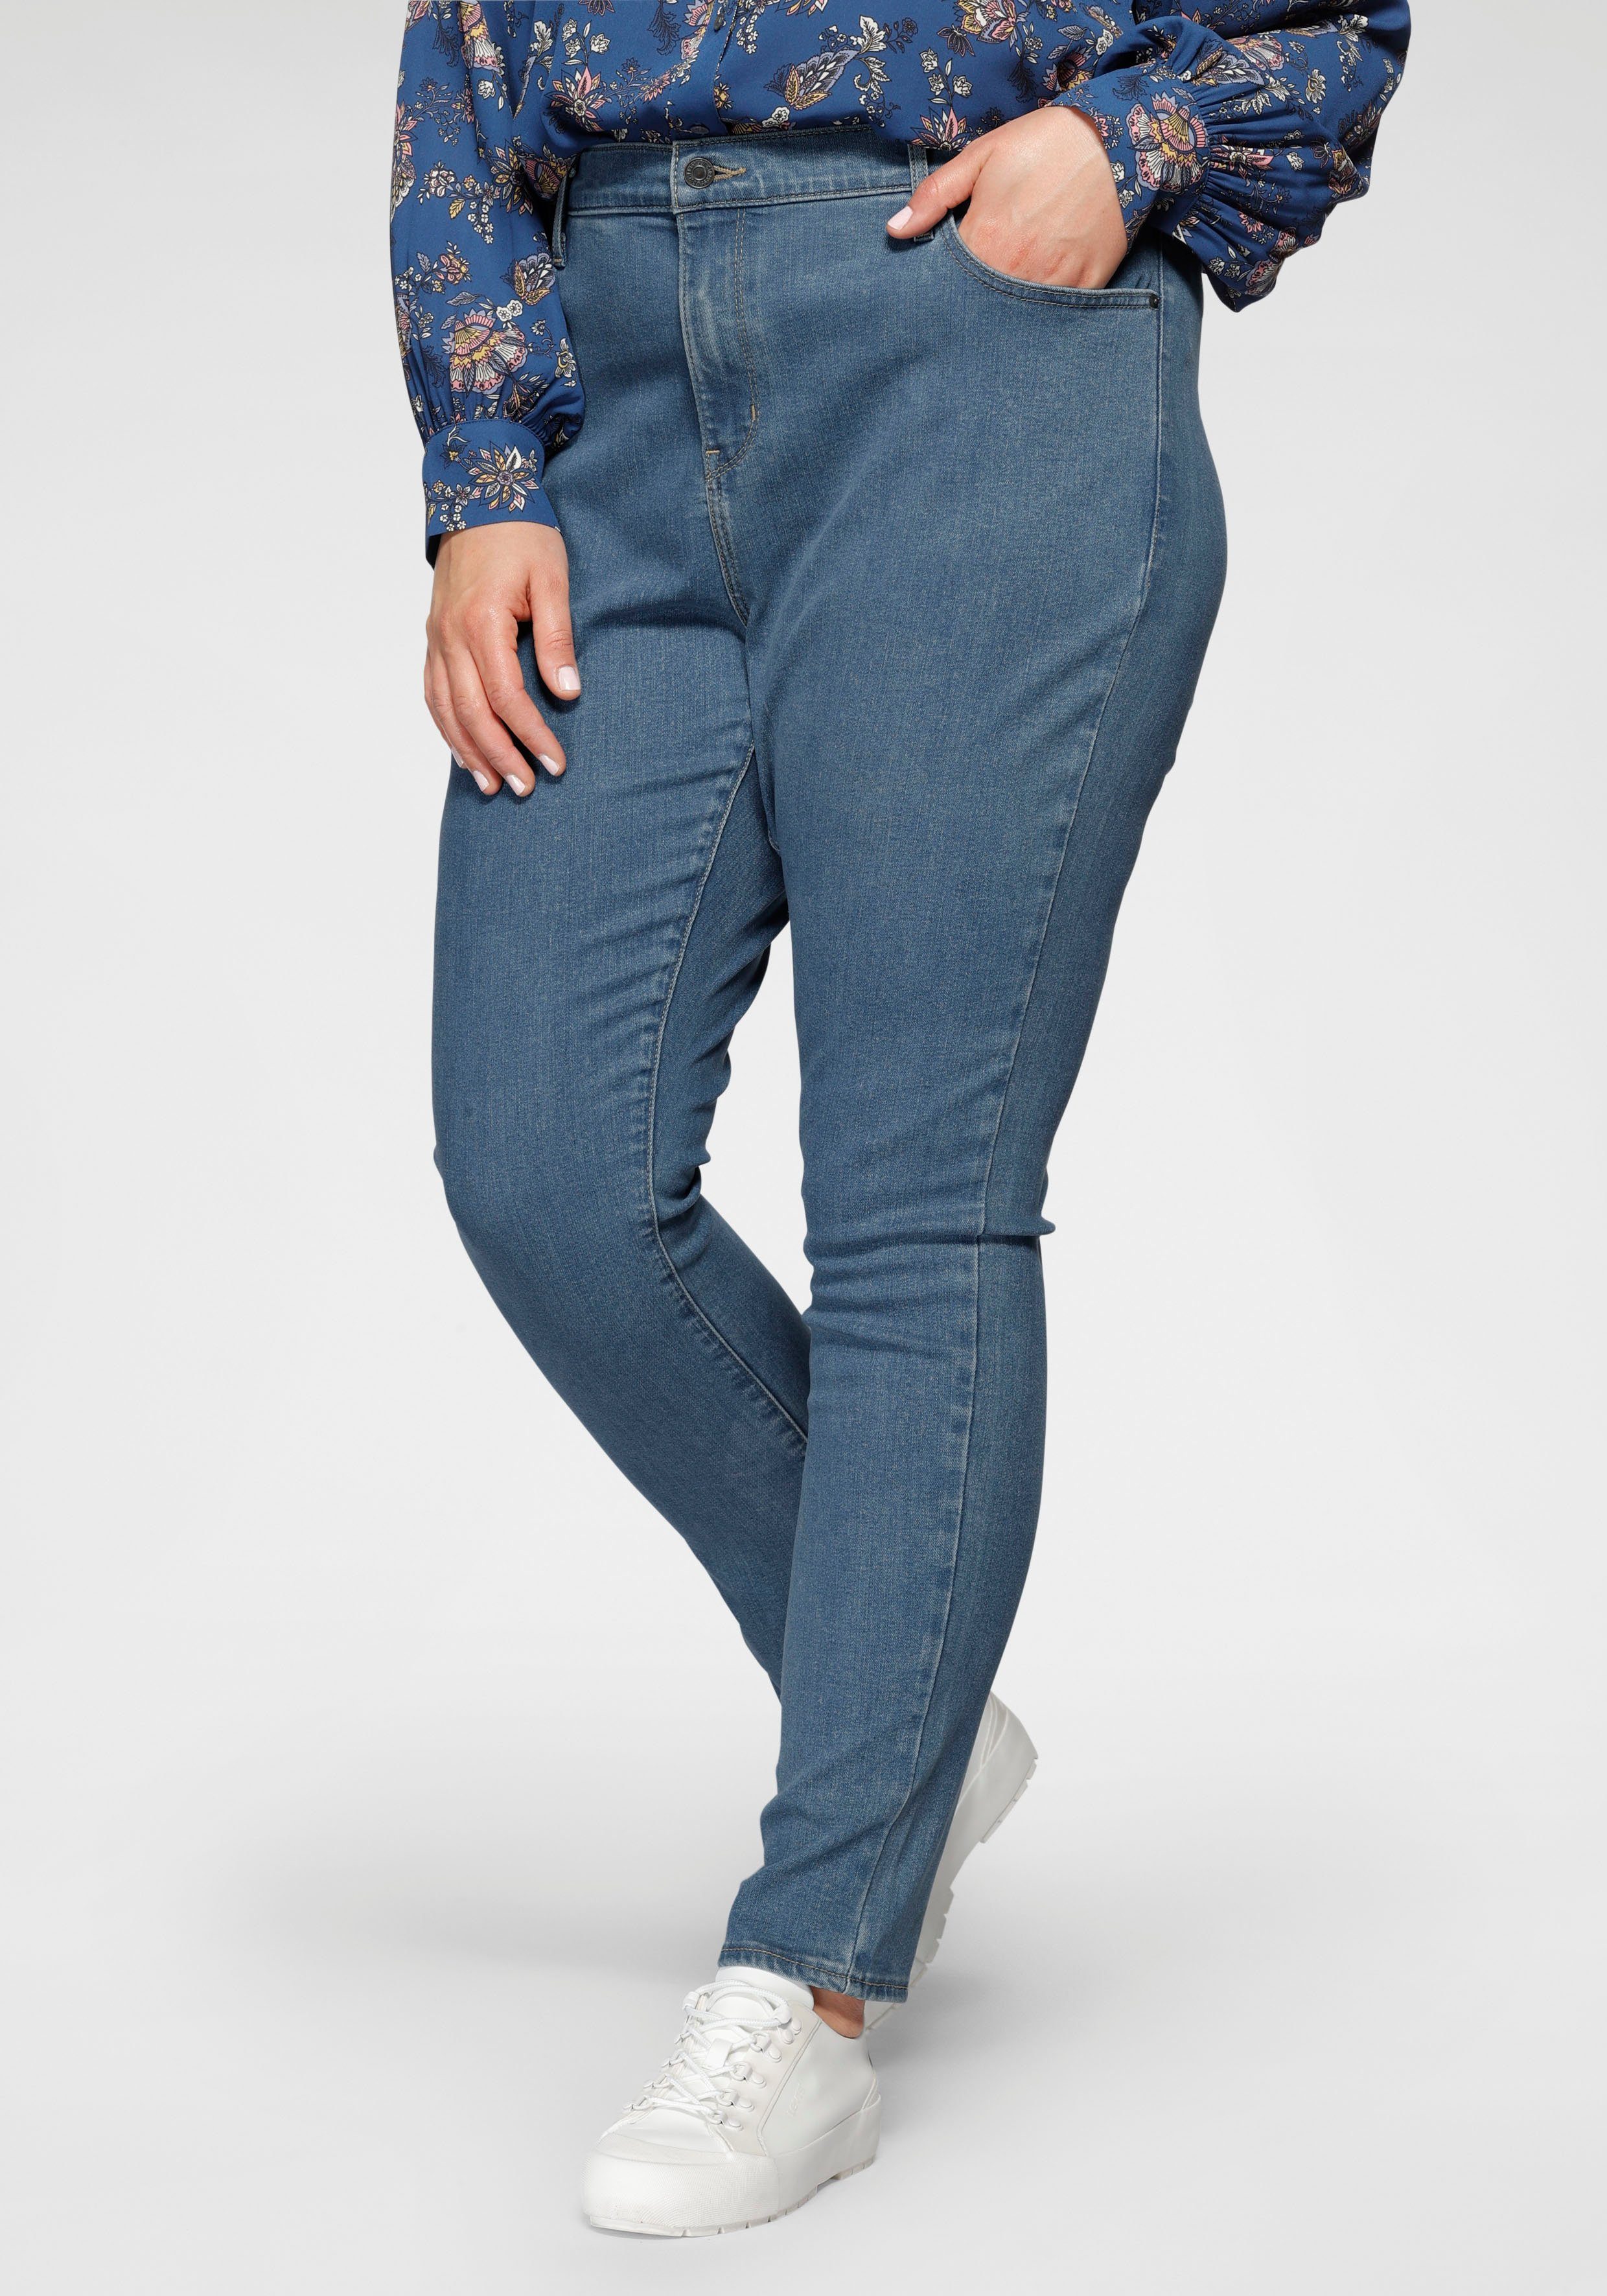 Karrieresprung Levi's® Plus Skinny-fit-Jeans Schnitt RISE 721 PL HI sehr mid-blue figurbetonter SKINNY